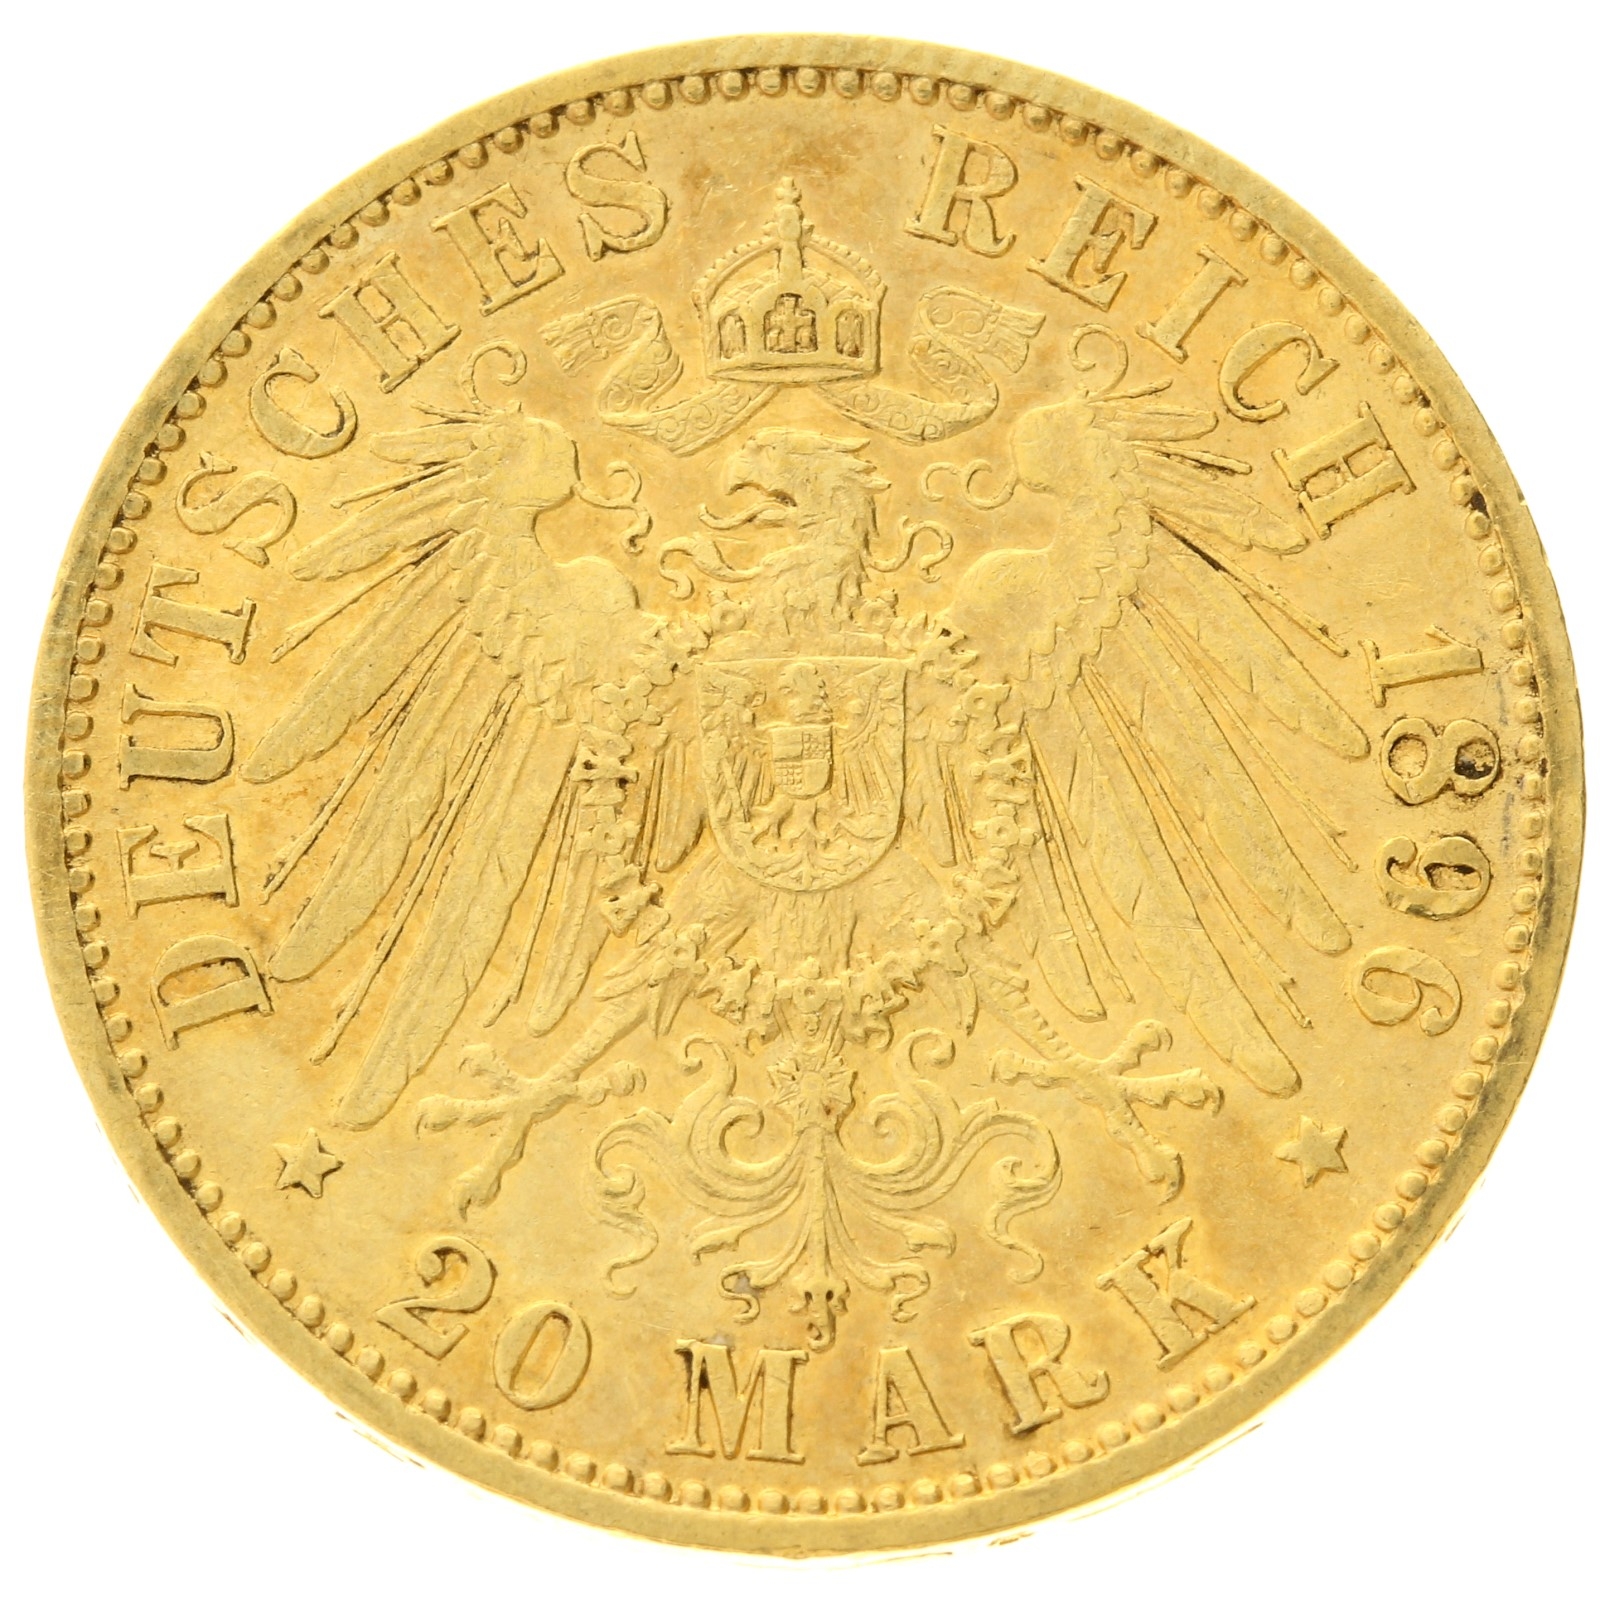 Germany - Prussia - 20 mark - 1896 - A - Wilhelm II